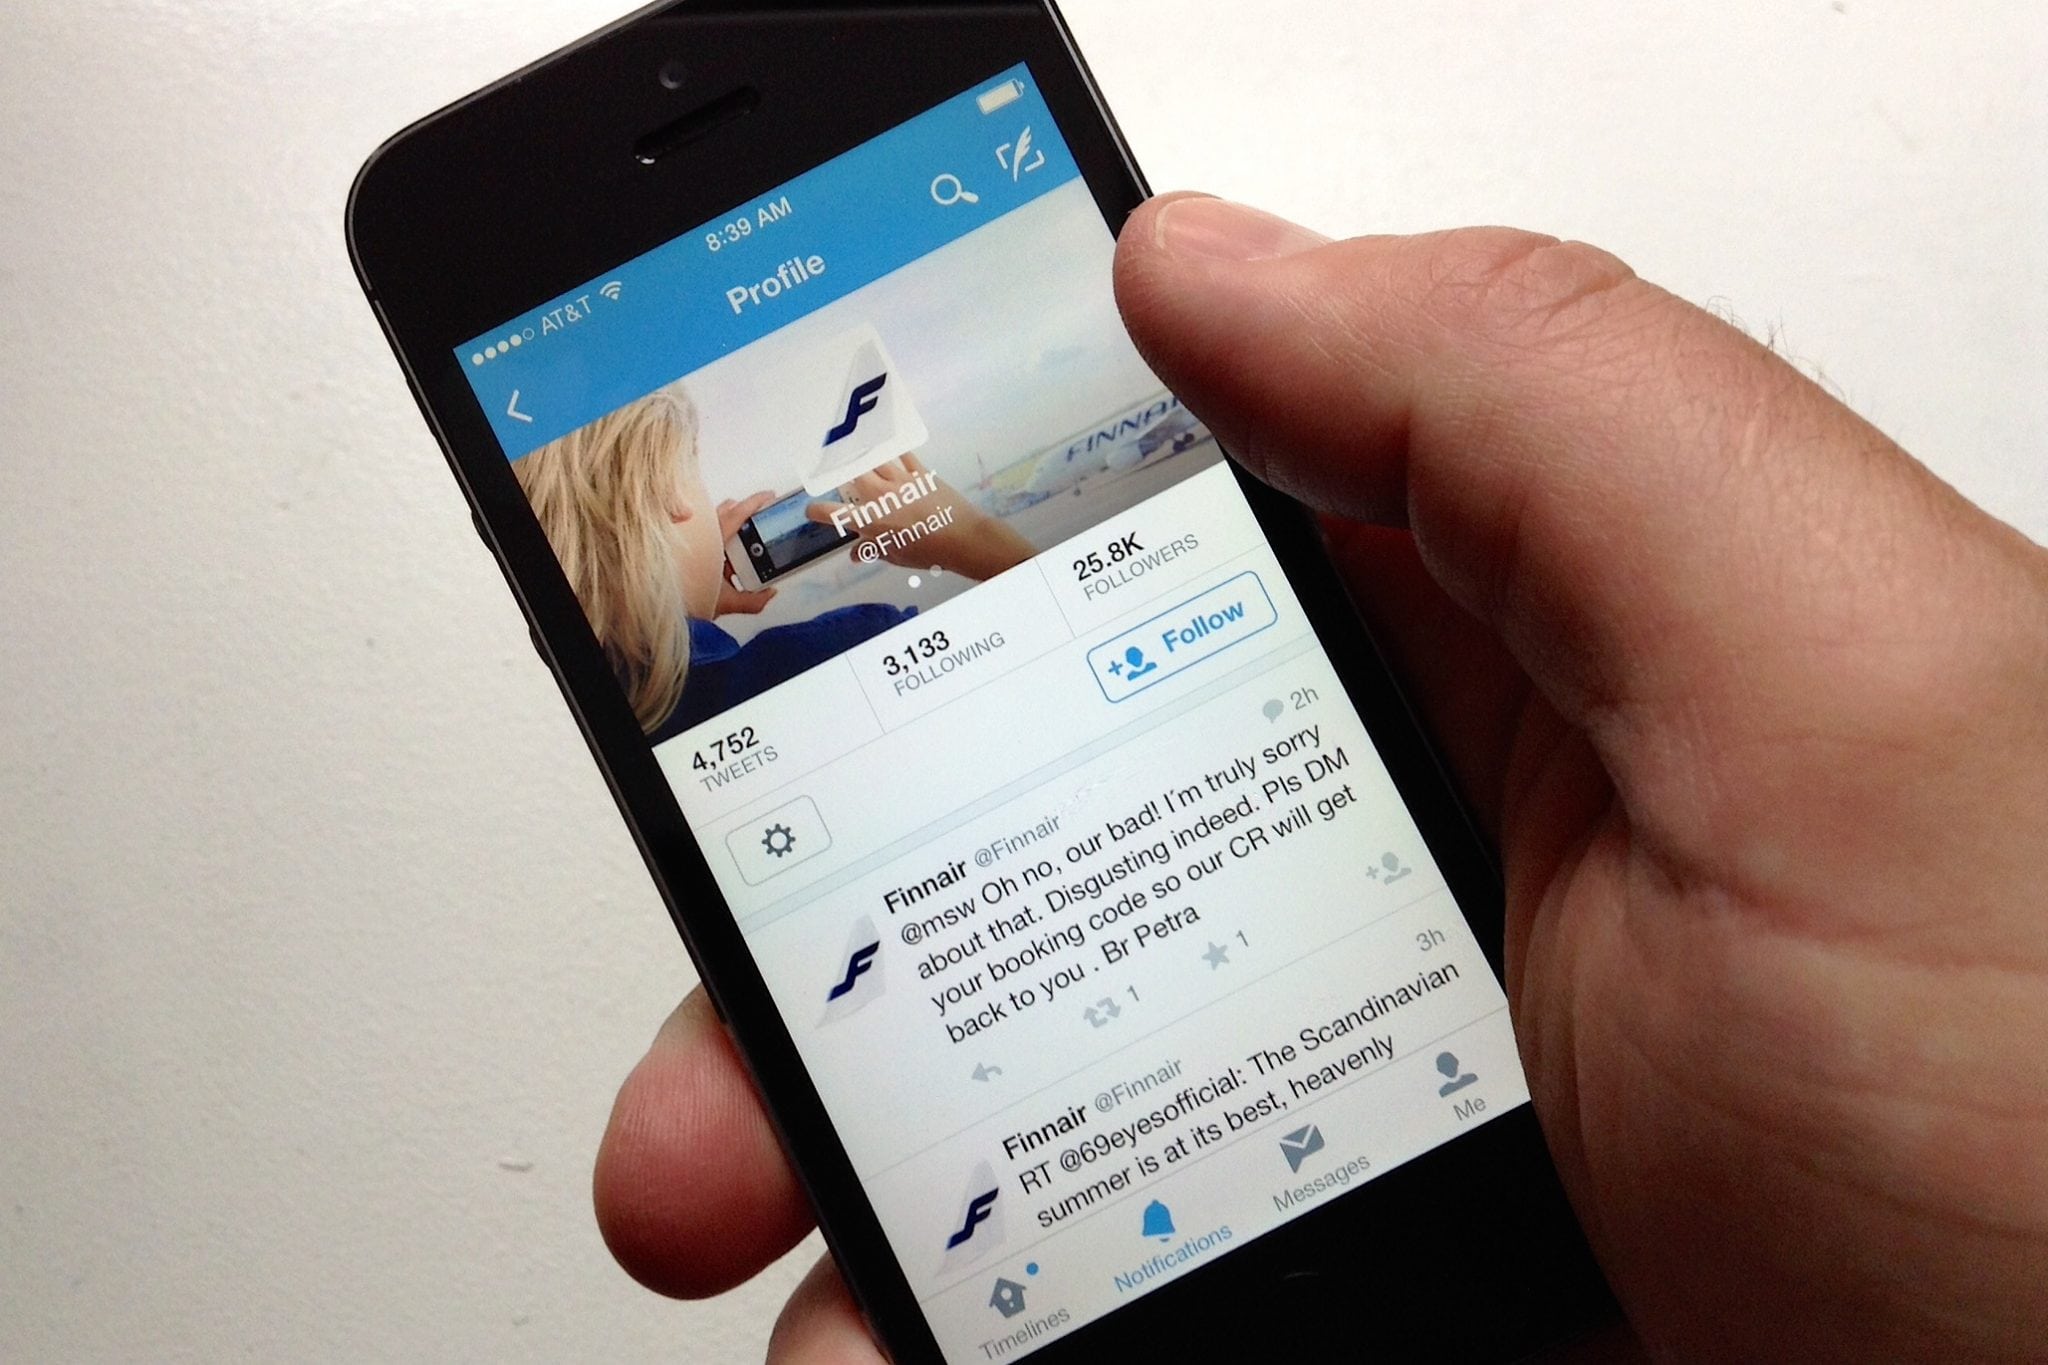 Finnair's Twitter feed on an iPhone. 